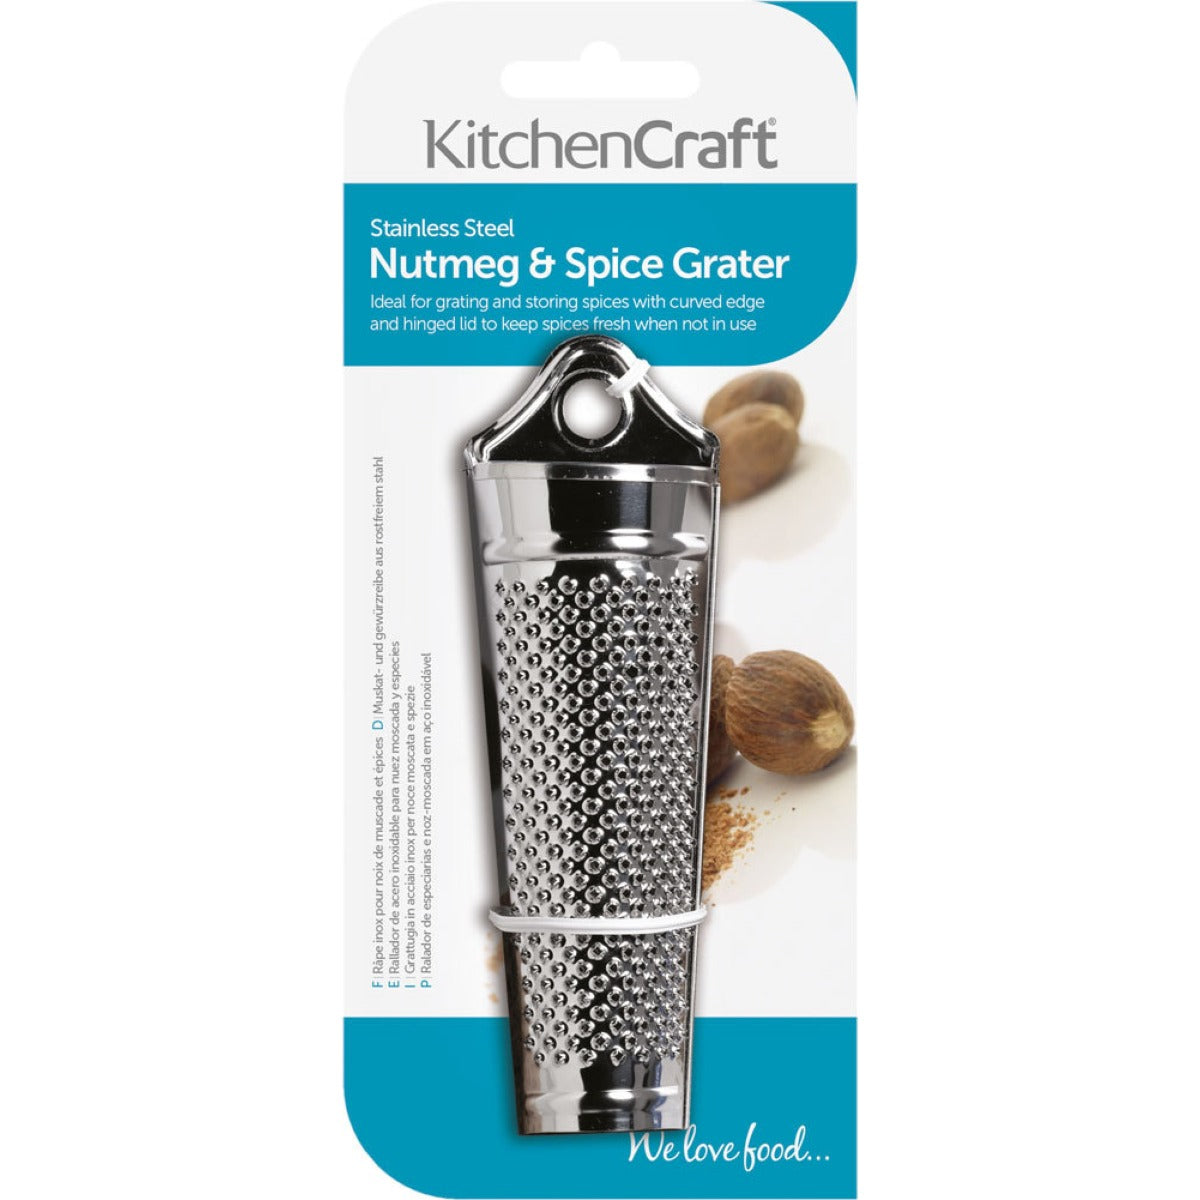 KitchenCraft Stainless Steel Nutmeg & Spice Grater